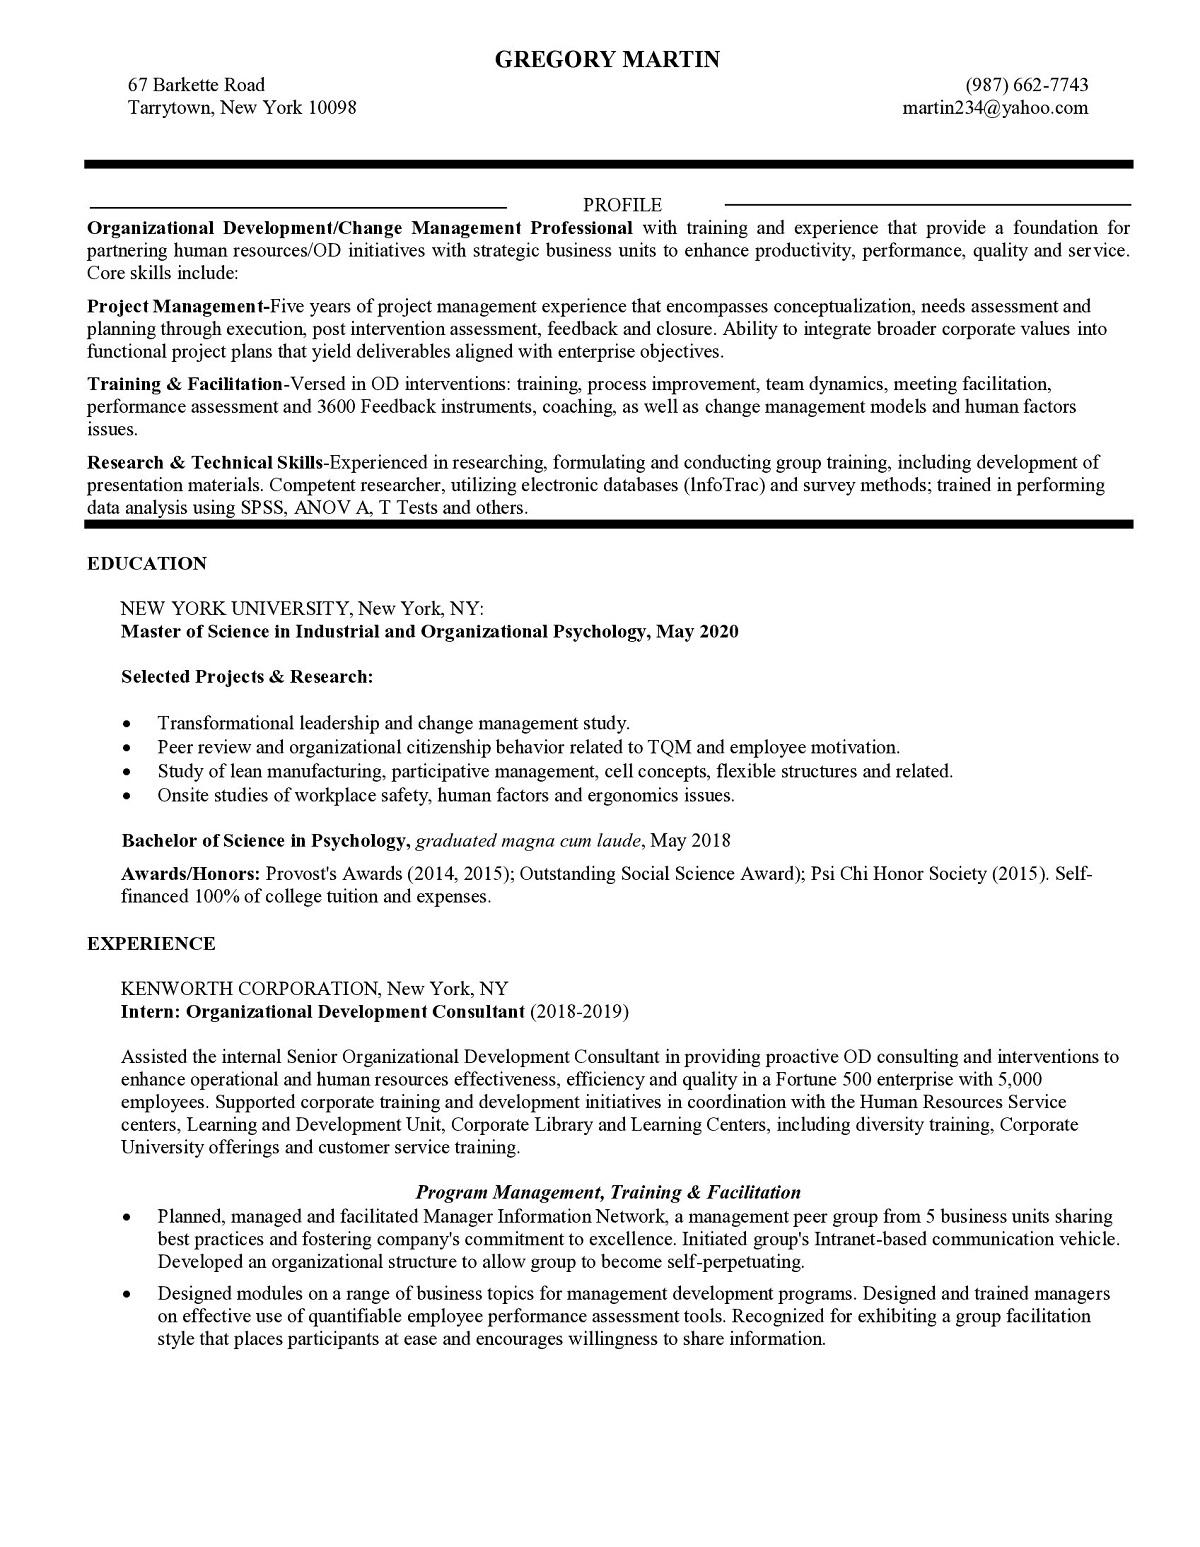 Sample resume: Organizational Development, Mid Experience, Chronological